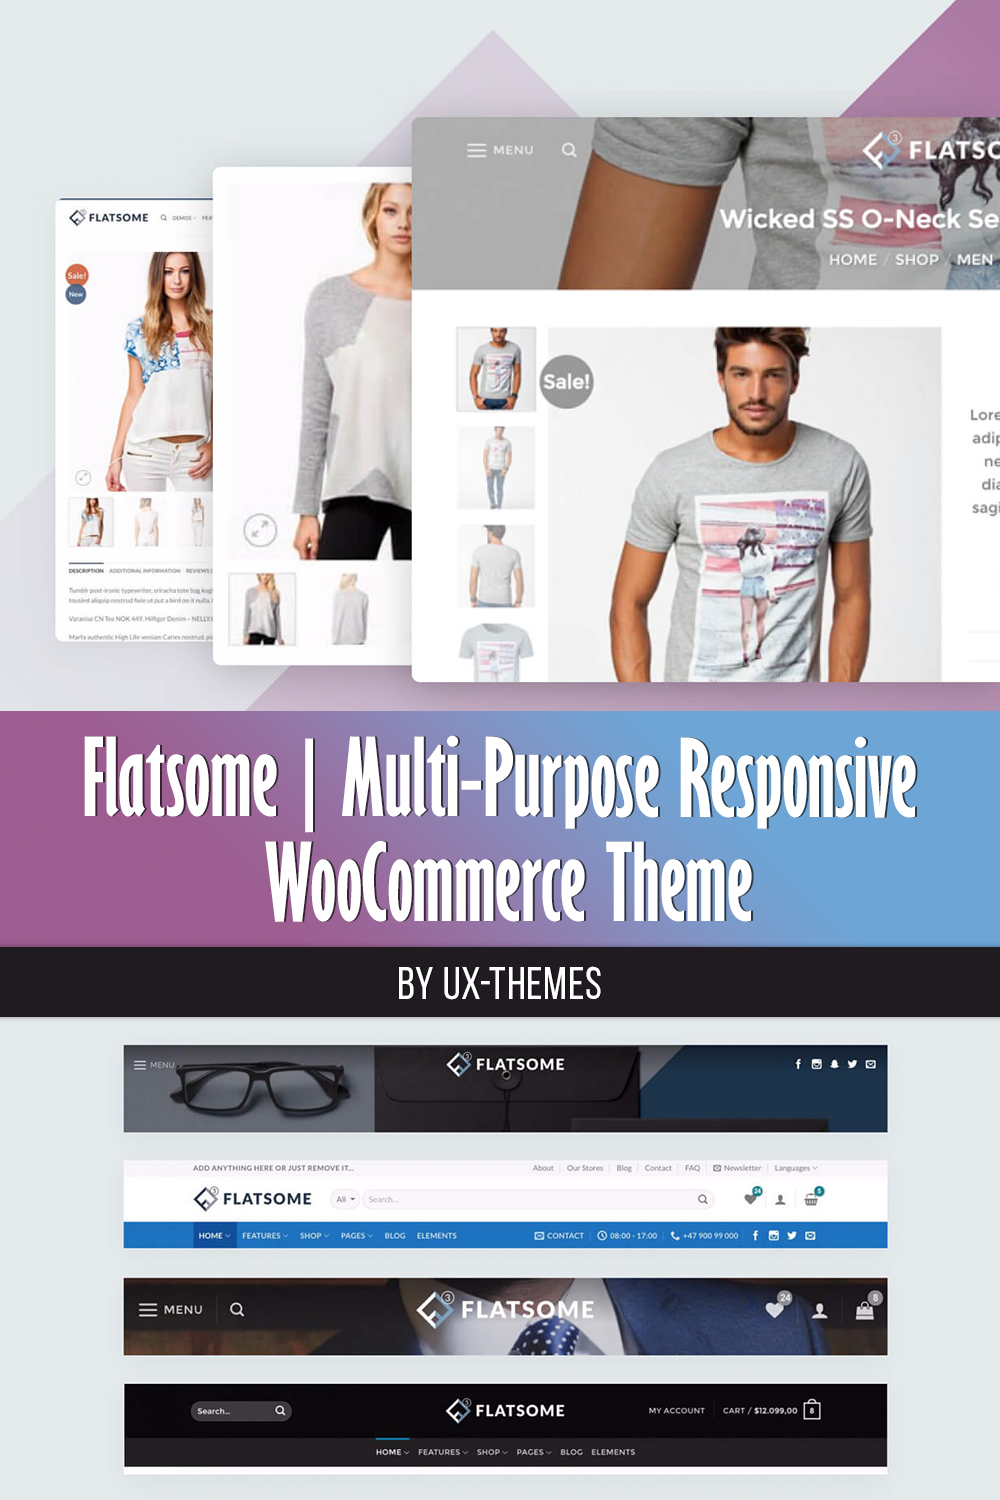 Pinterest flatsome multi purpose responsive woocommerce theme.